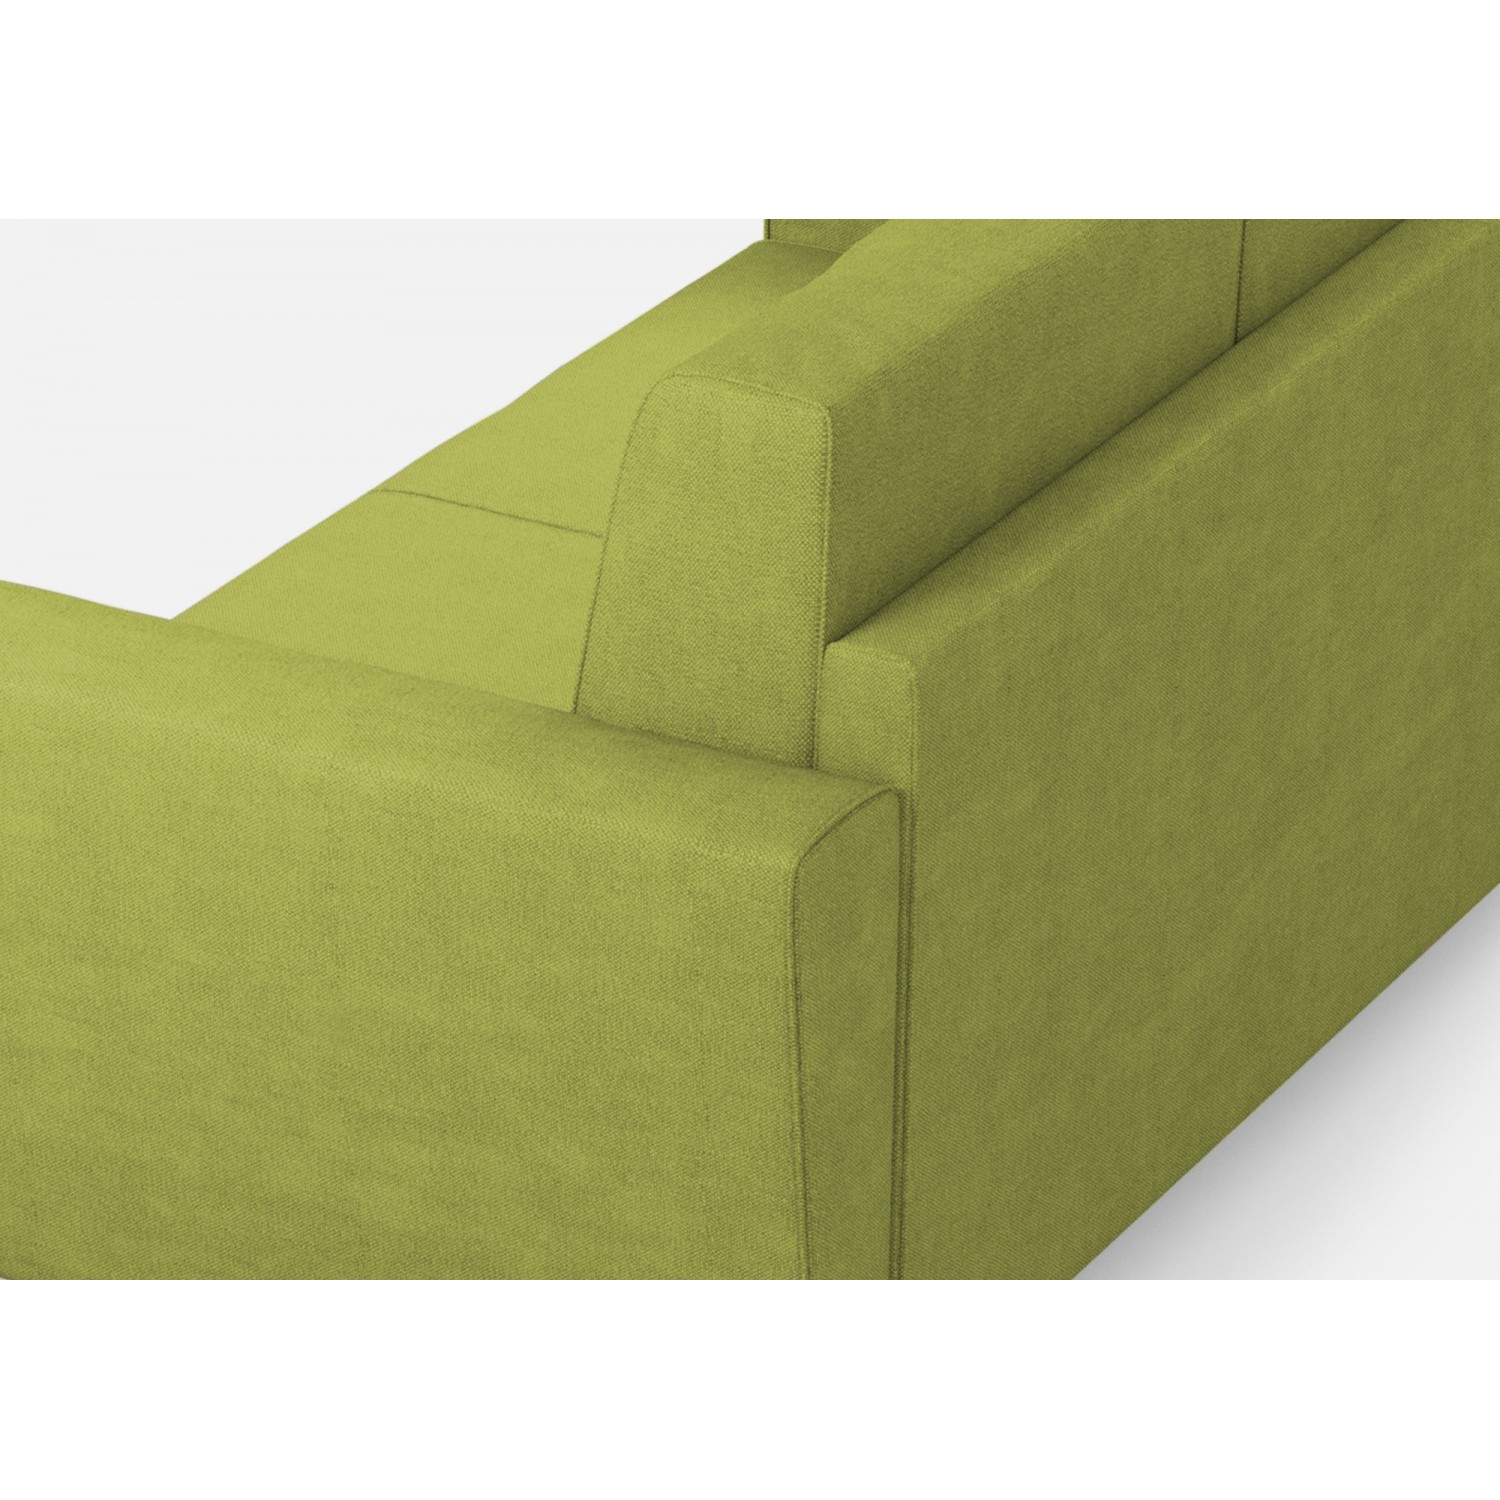 Ityhome Divano Yasel 2 posti (due sedute da 60cm)+ angolo + divano 2 posti (due sedute da 60cm) misure esterne L.228x228 verde